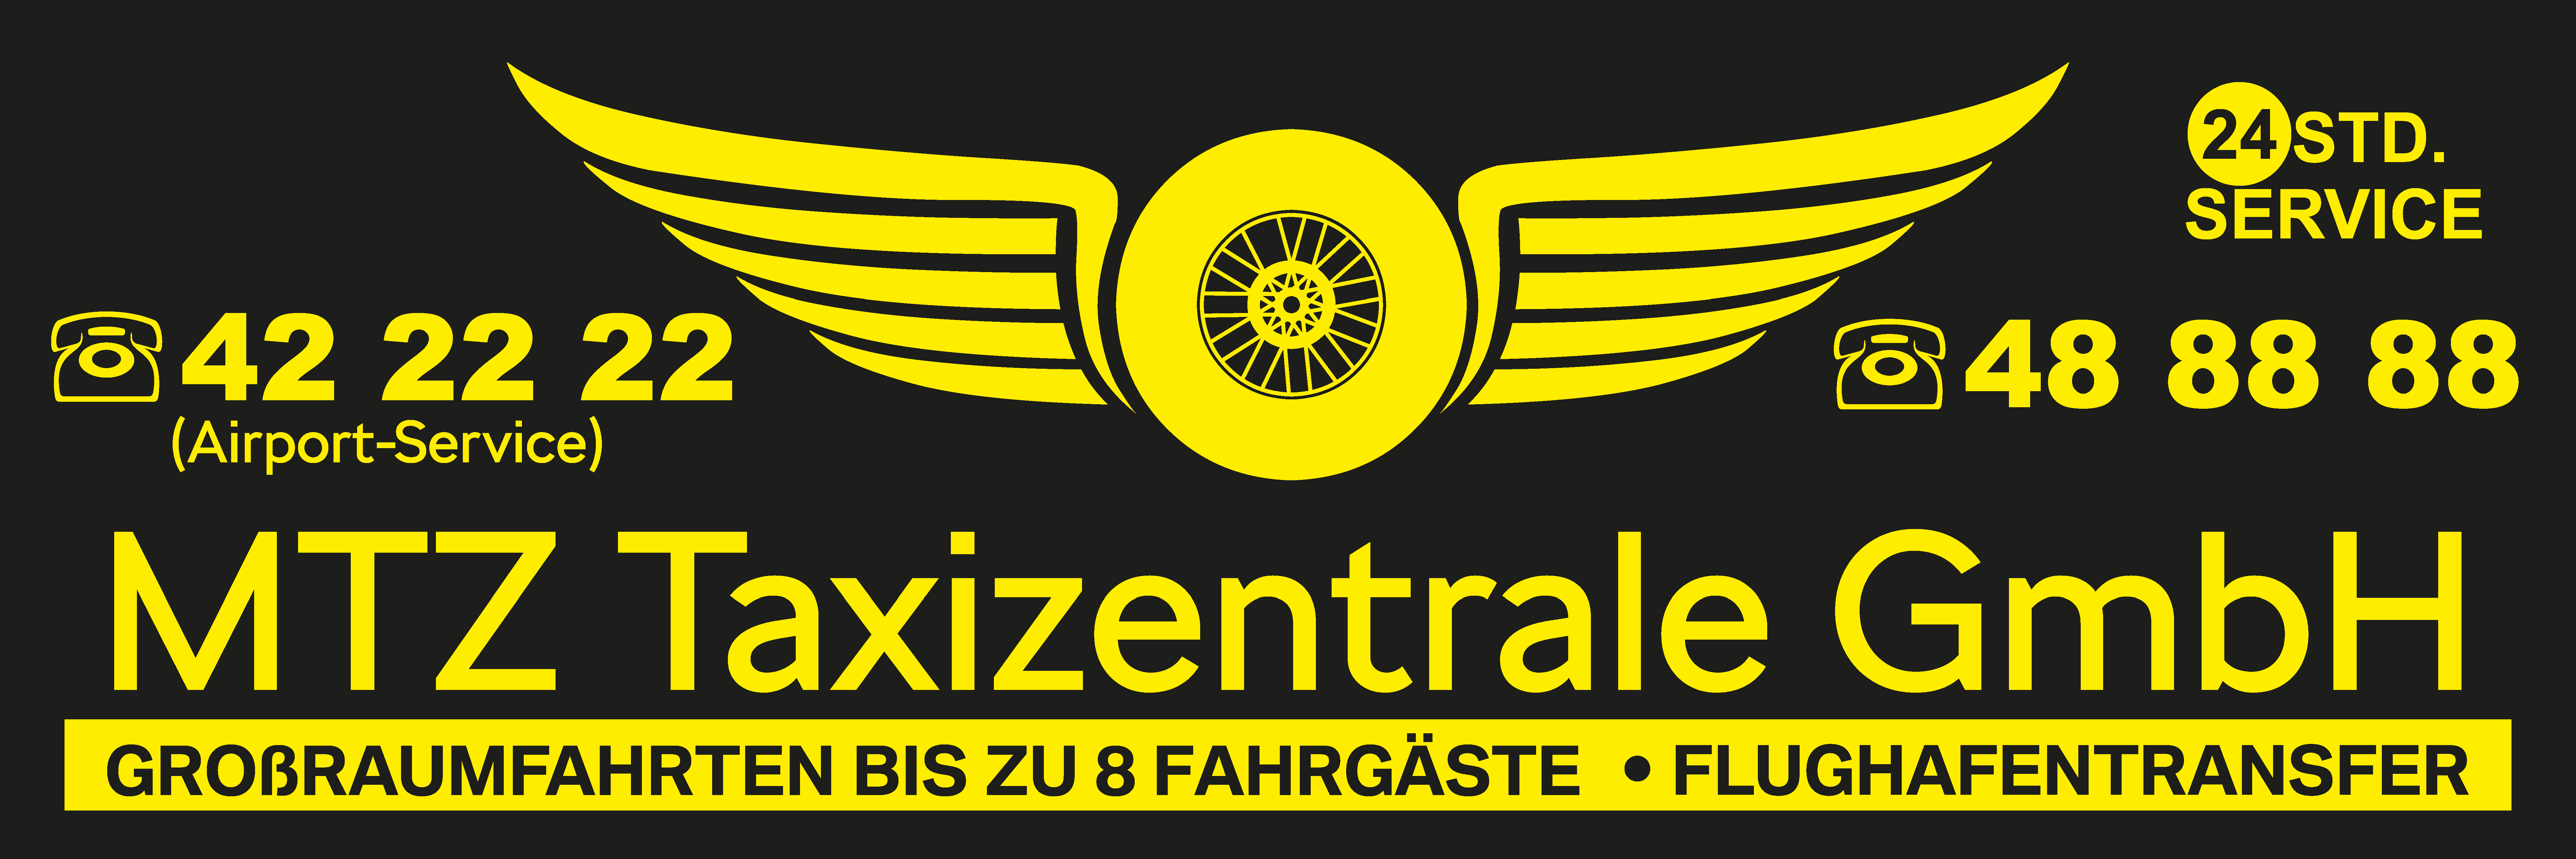 MTZ_Taxizentrale_300x100